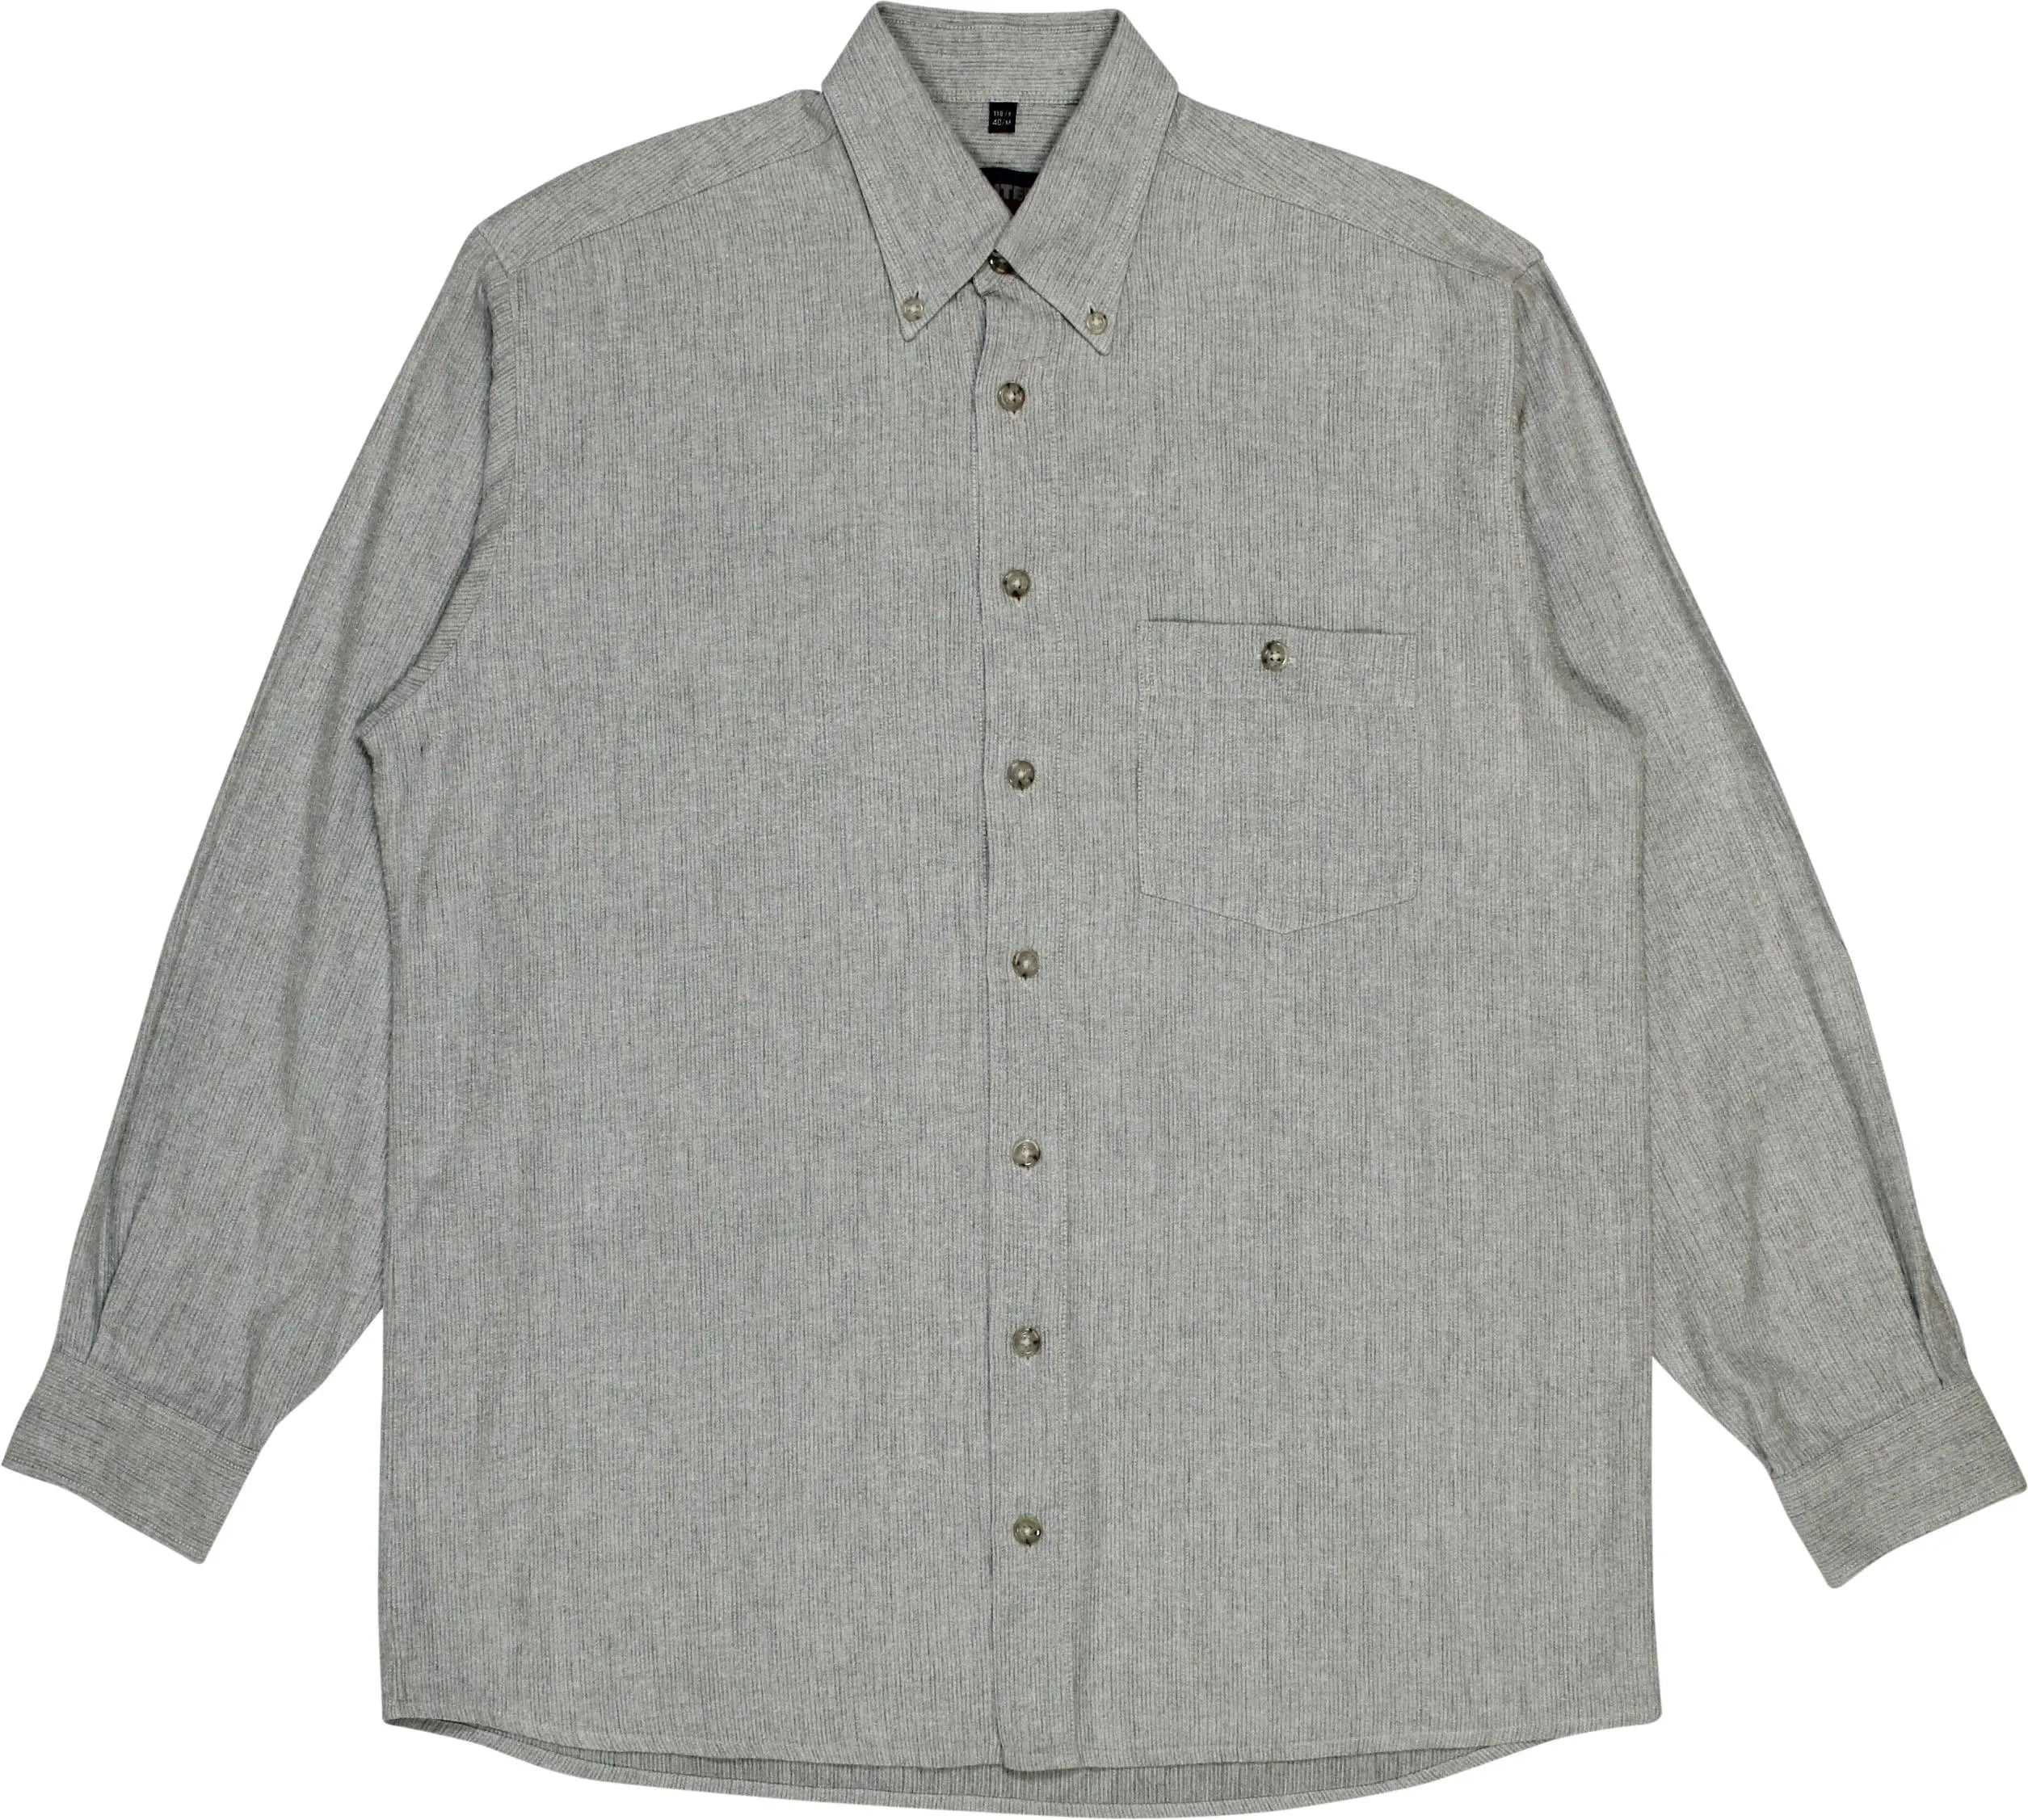 Jupiter - Grey Long Sleeve Shirt- ThriftTale.com - Vintage and second handclothing